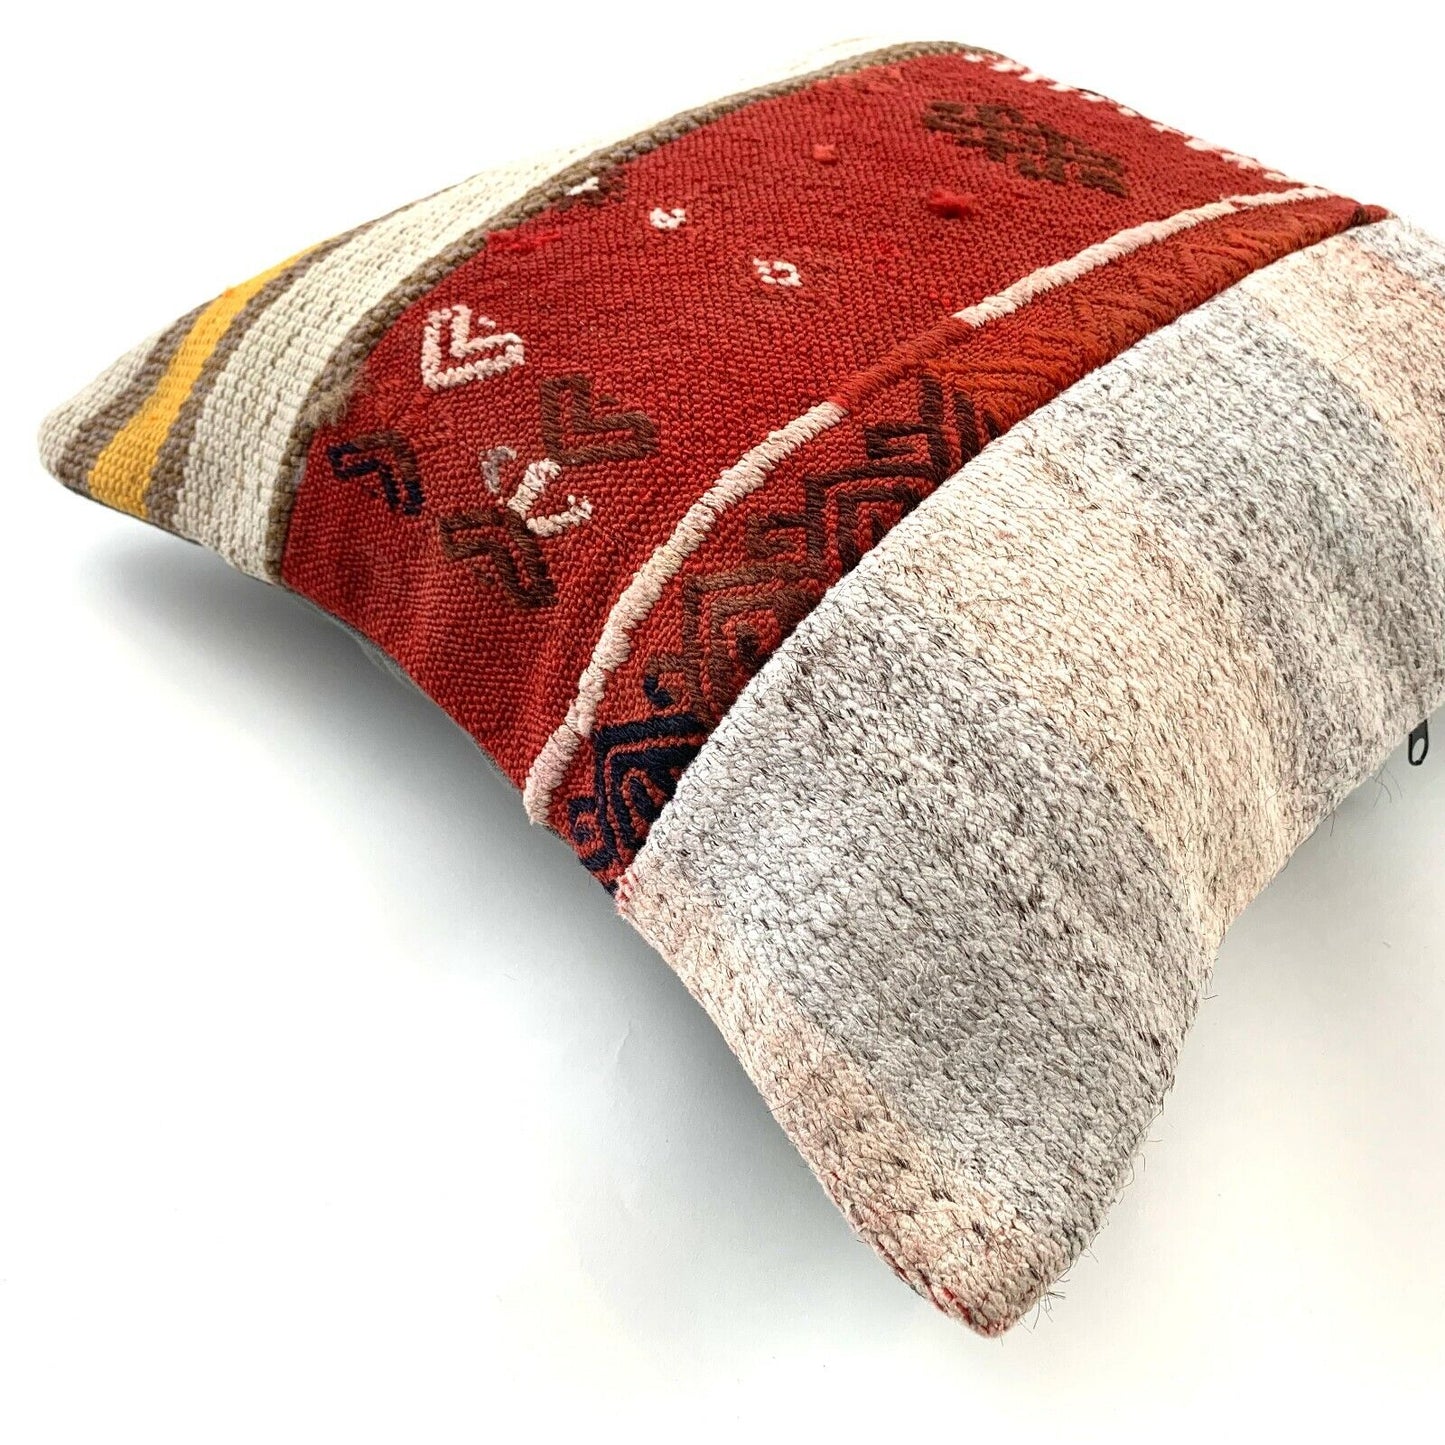 16x16 Turkish Kilim Pillow, Decorative Throw Pillow, Patchwork Kelim Kissenbezug